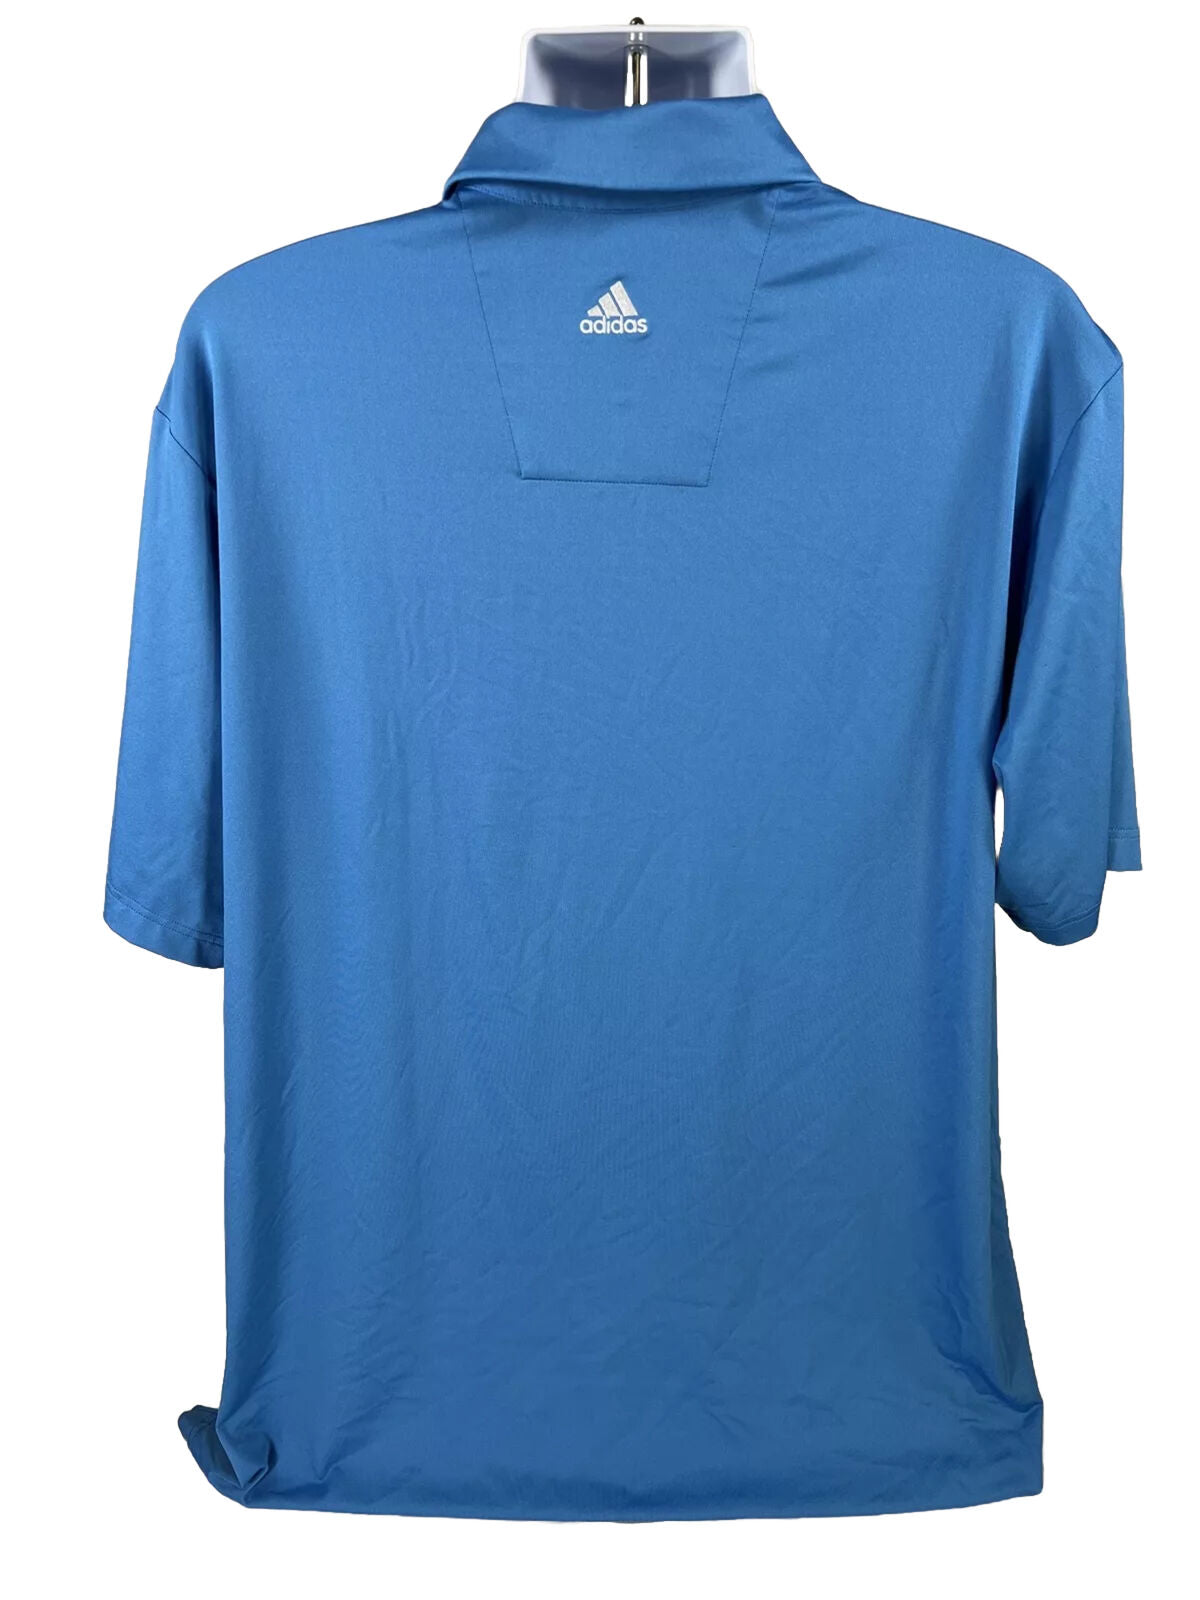 adidas Men's Blue Climalite Short Sleeve Golf Polo Shirt - 2XL